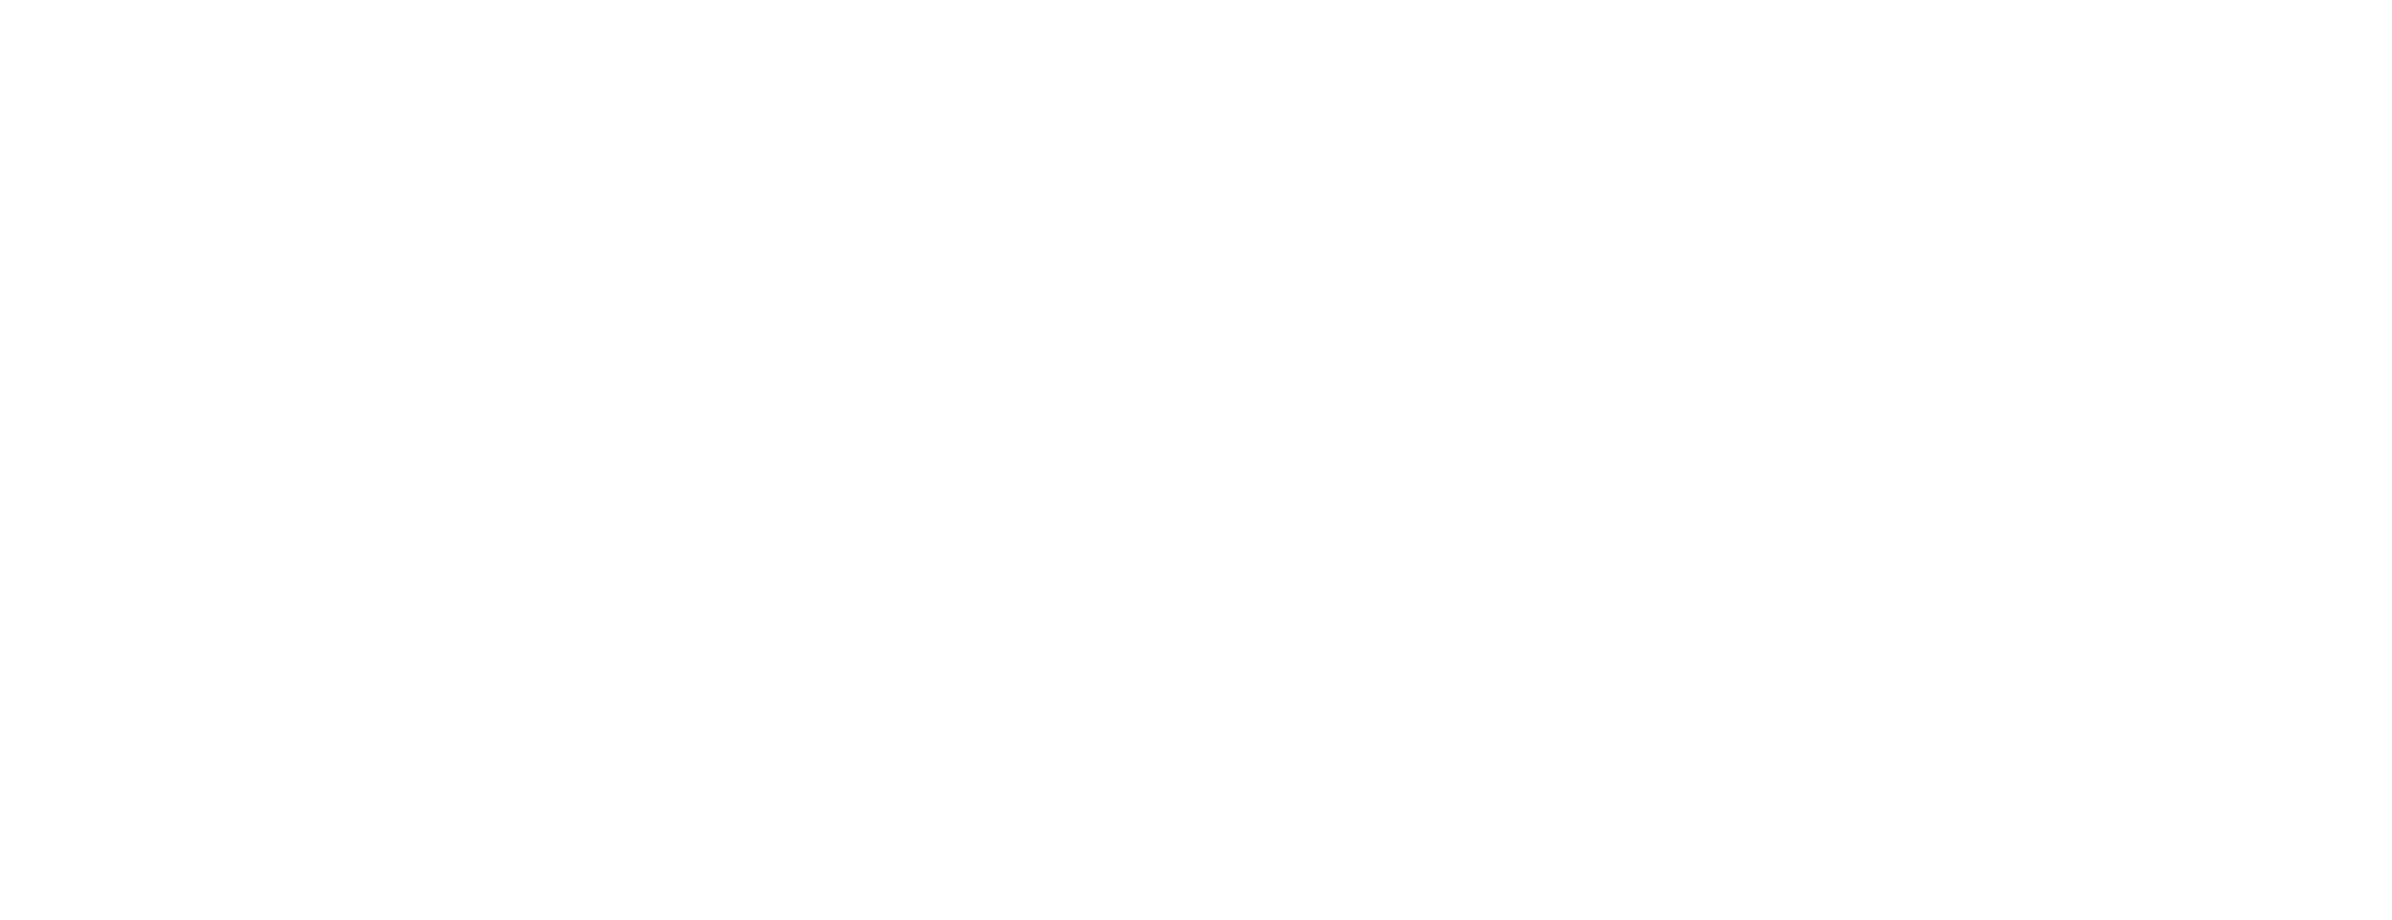 Aurora Acro Dance logo